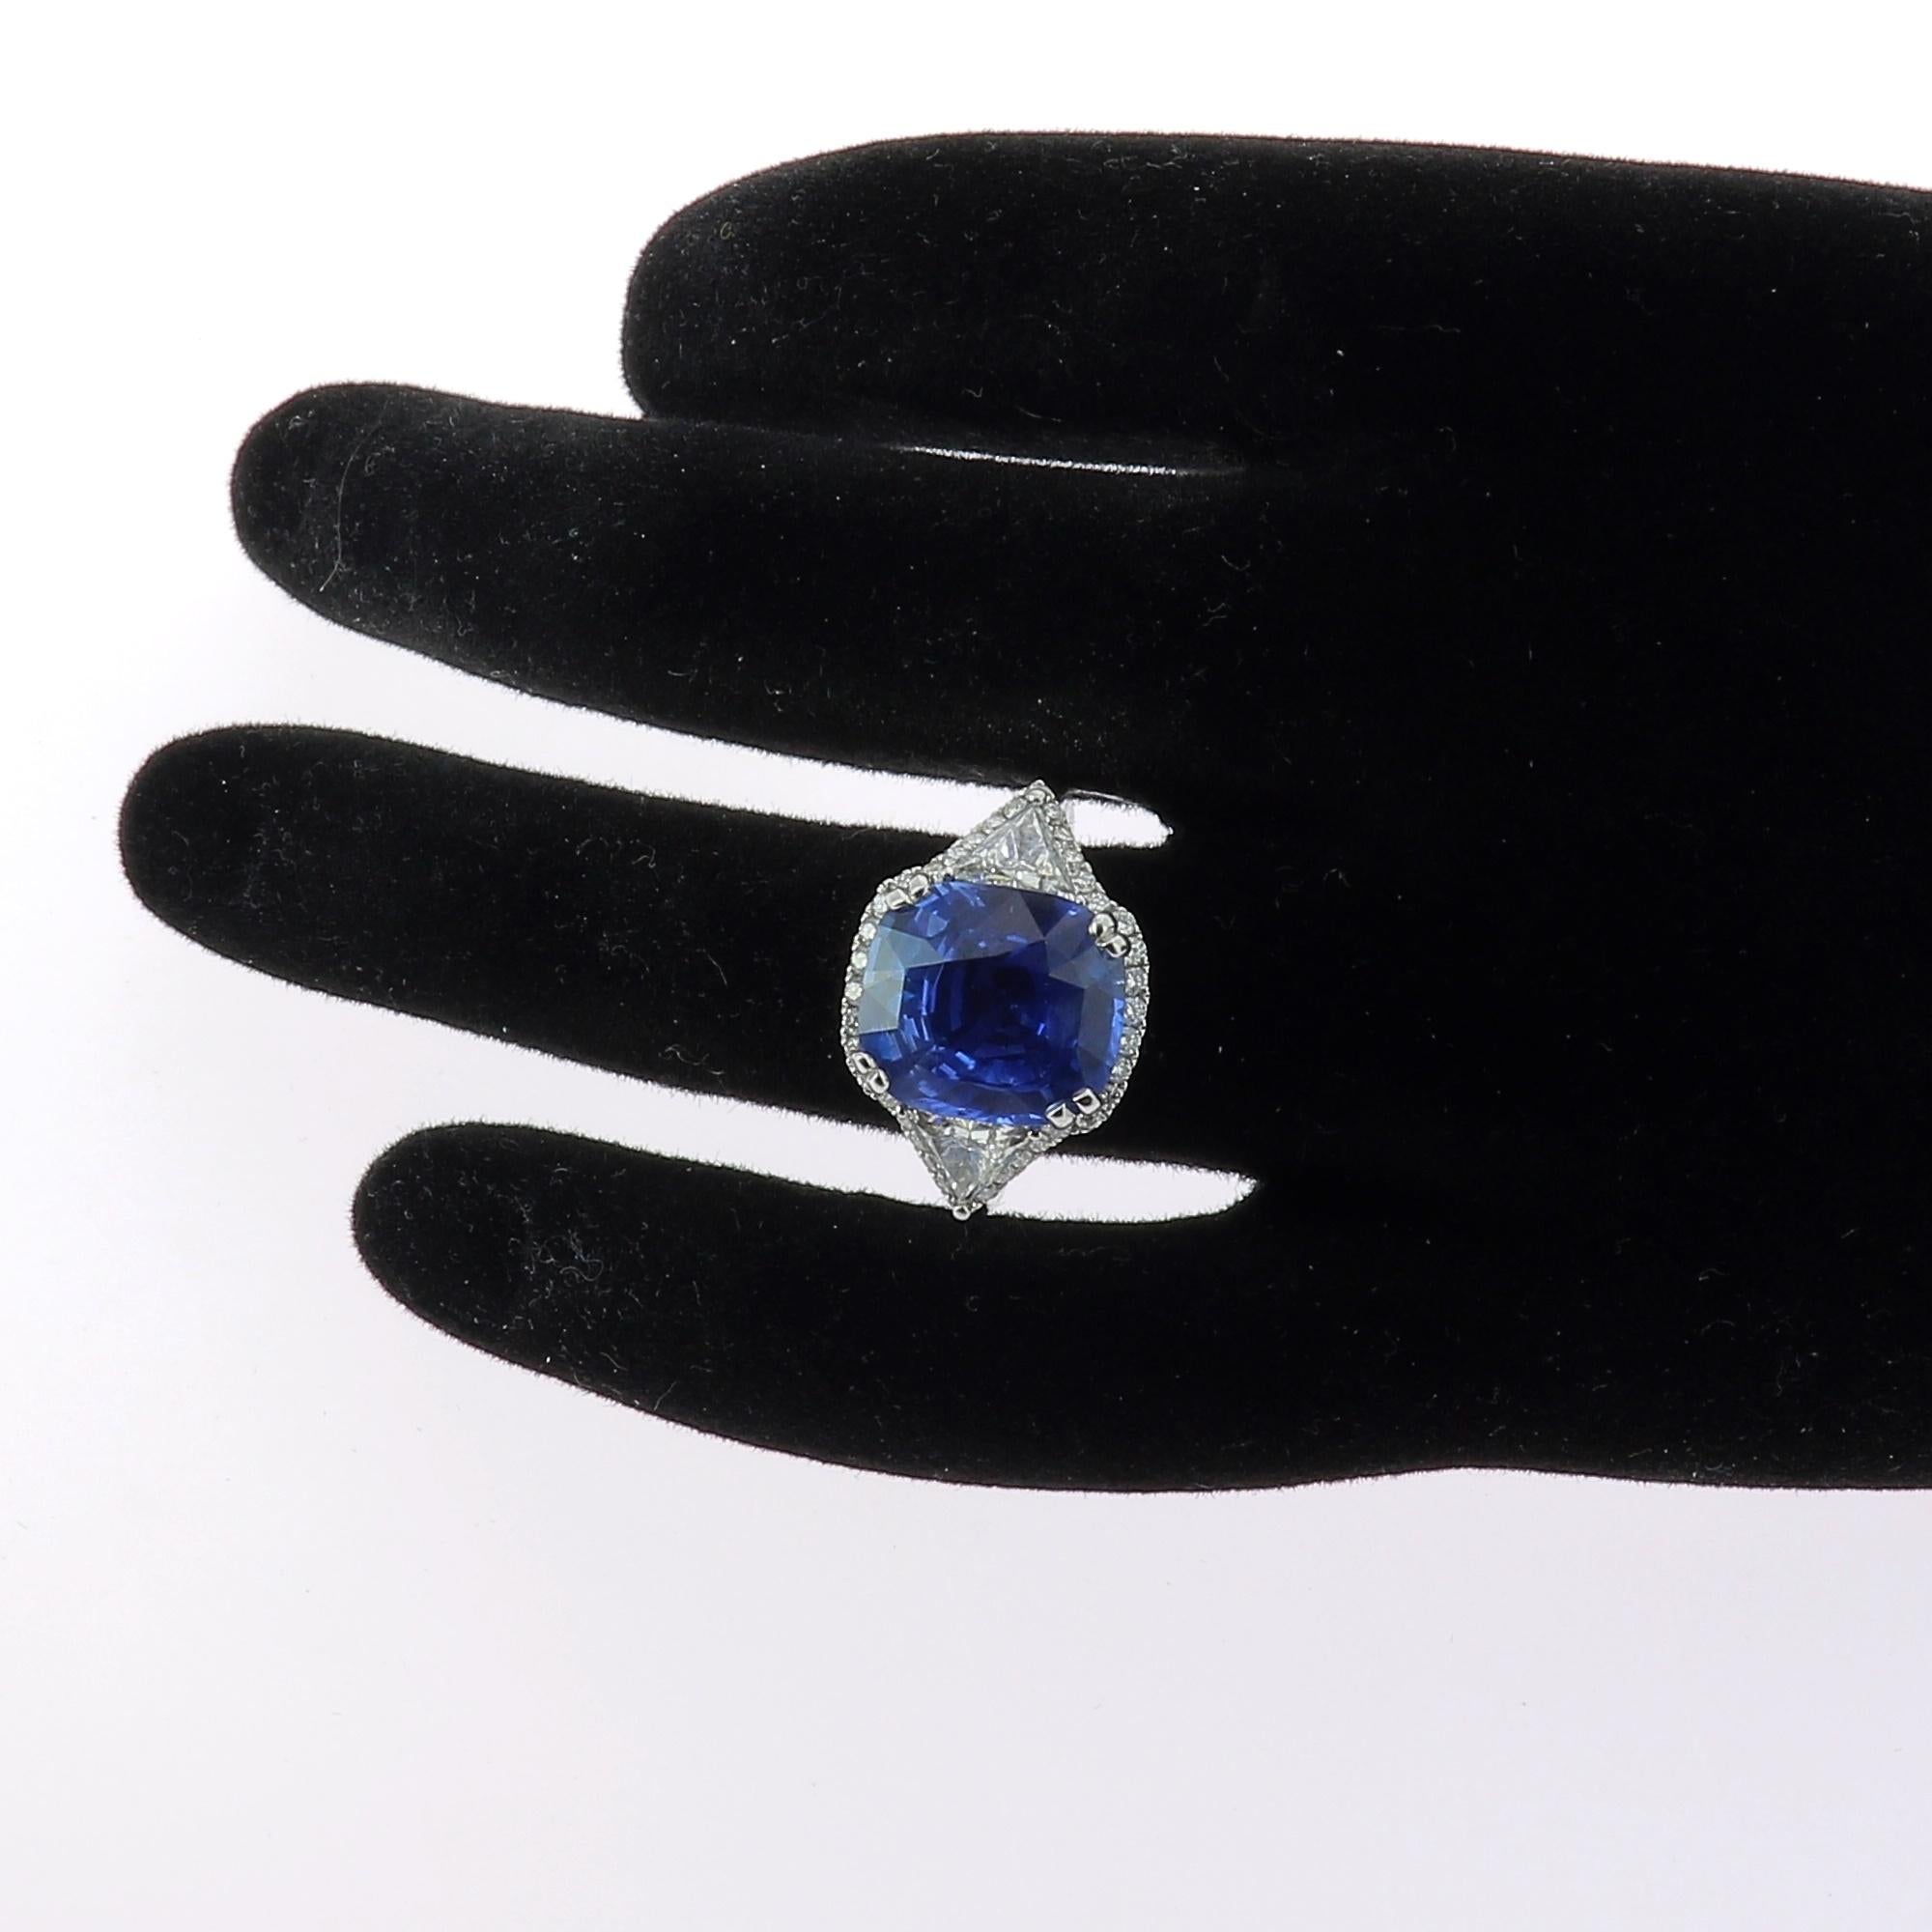 Women's or Men's 7.16 Carat Ceylon Intense Blue Sapphire Cocktail Ring Set with Round Diamond